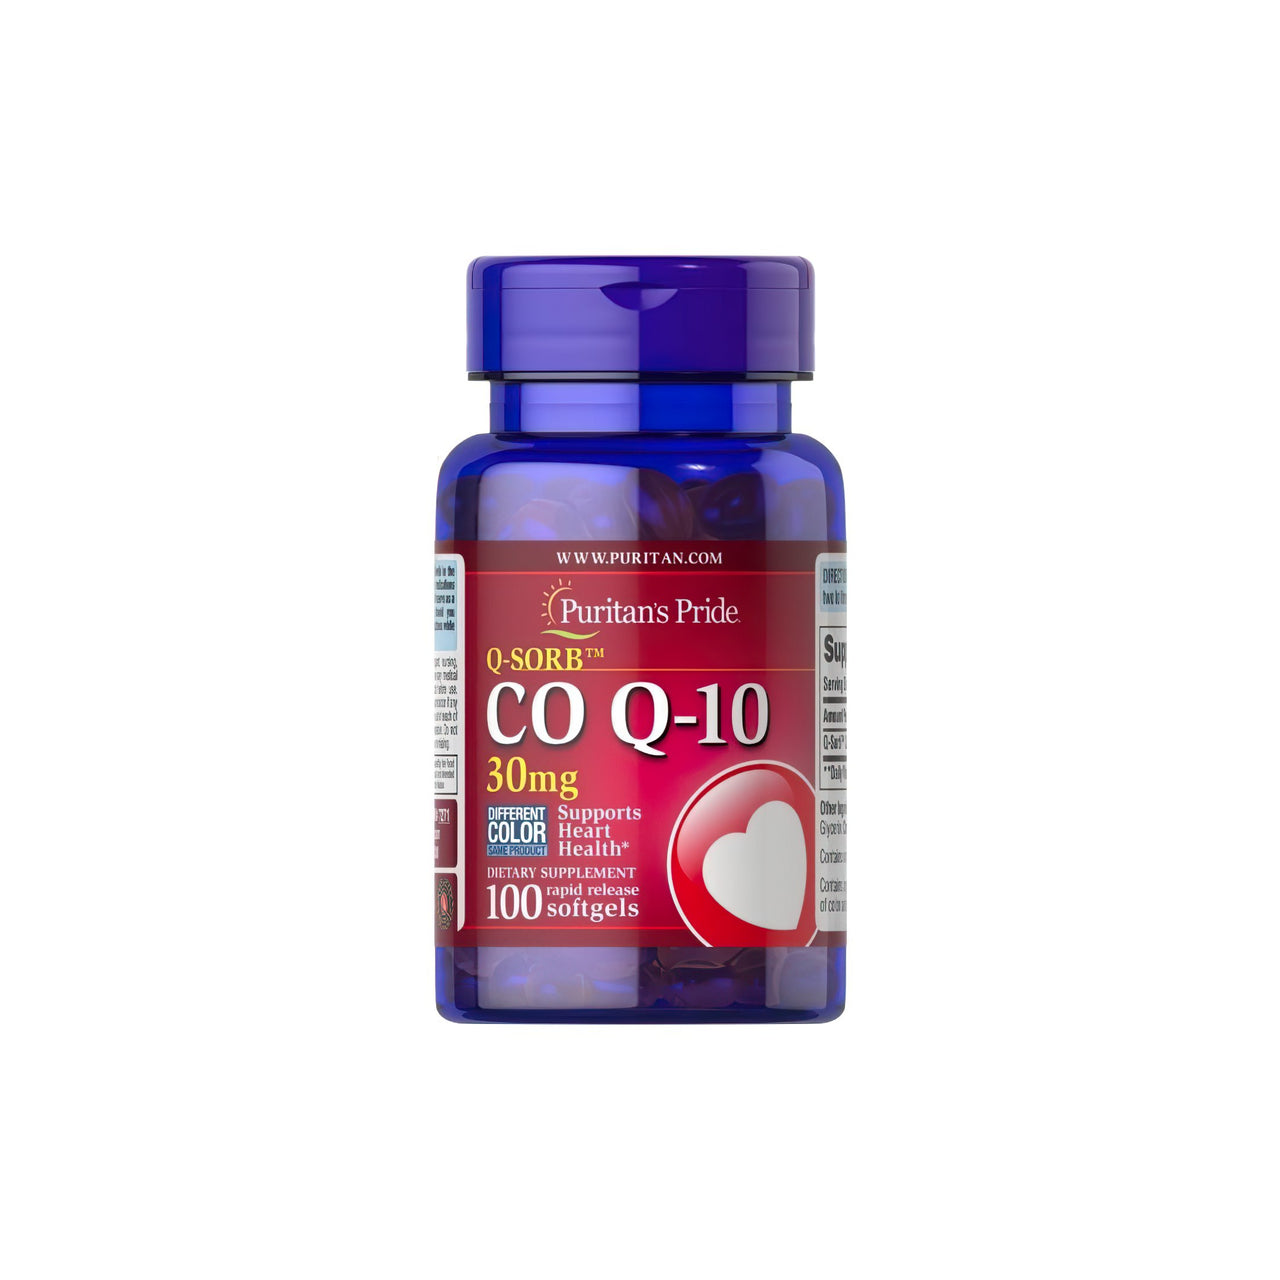 Q-SORB™ Co Q-10 30 mg 100 rapid release softgels - front